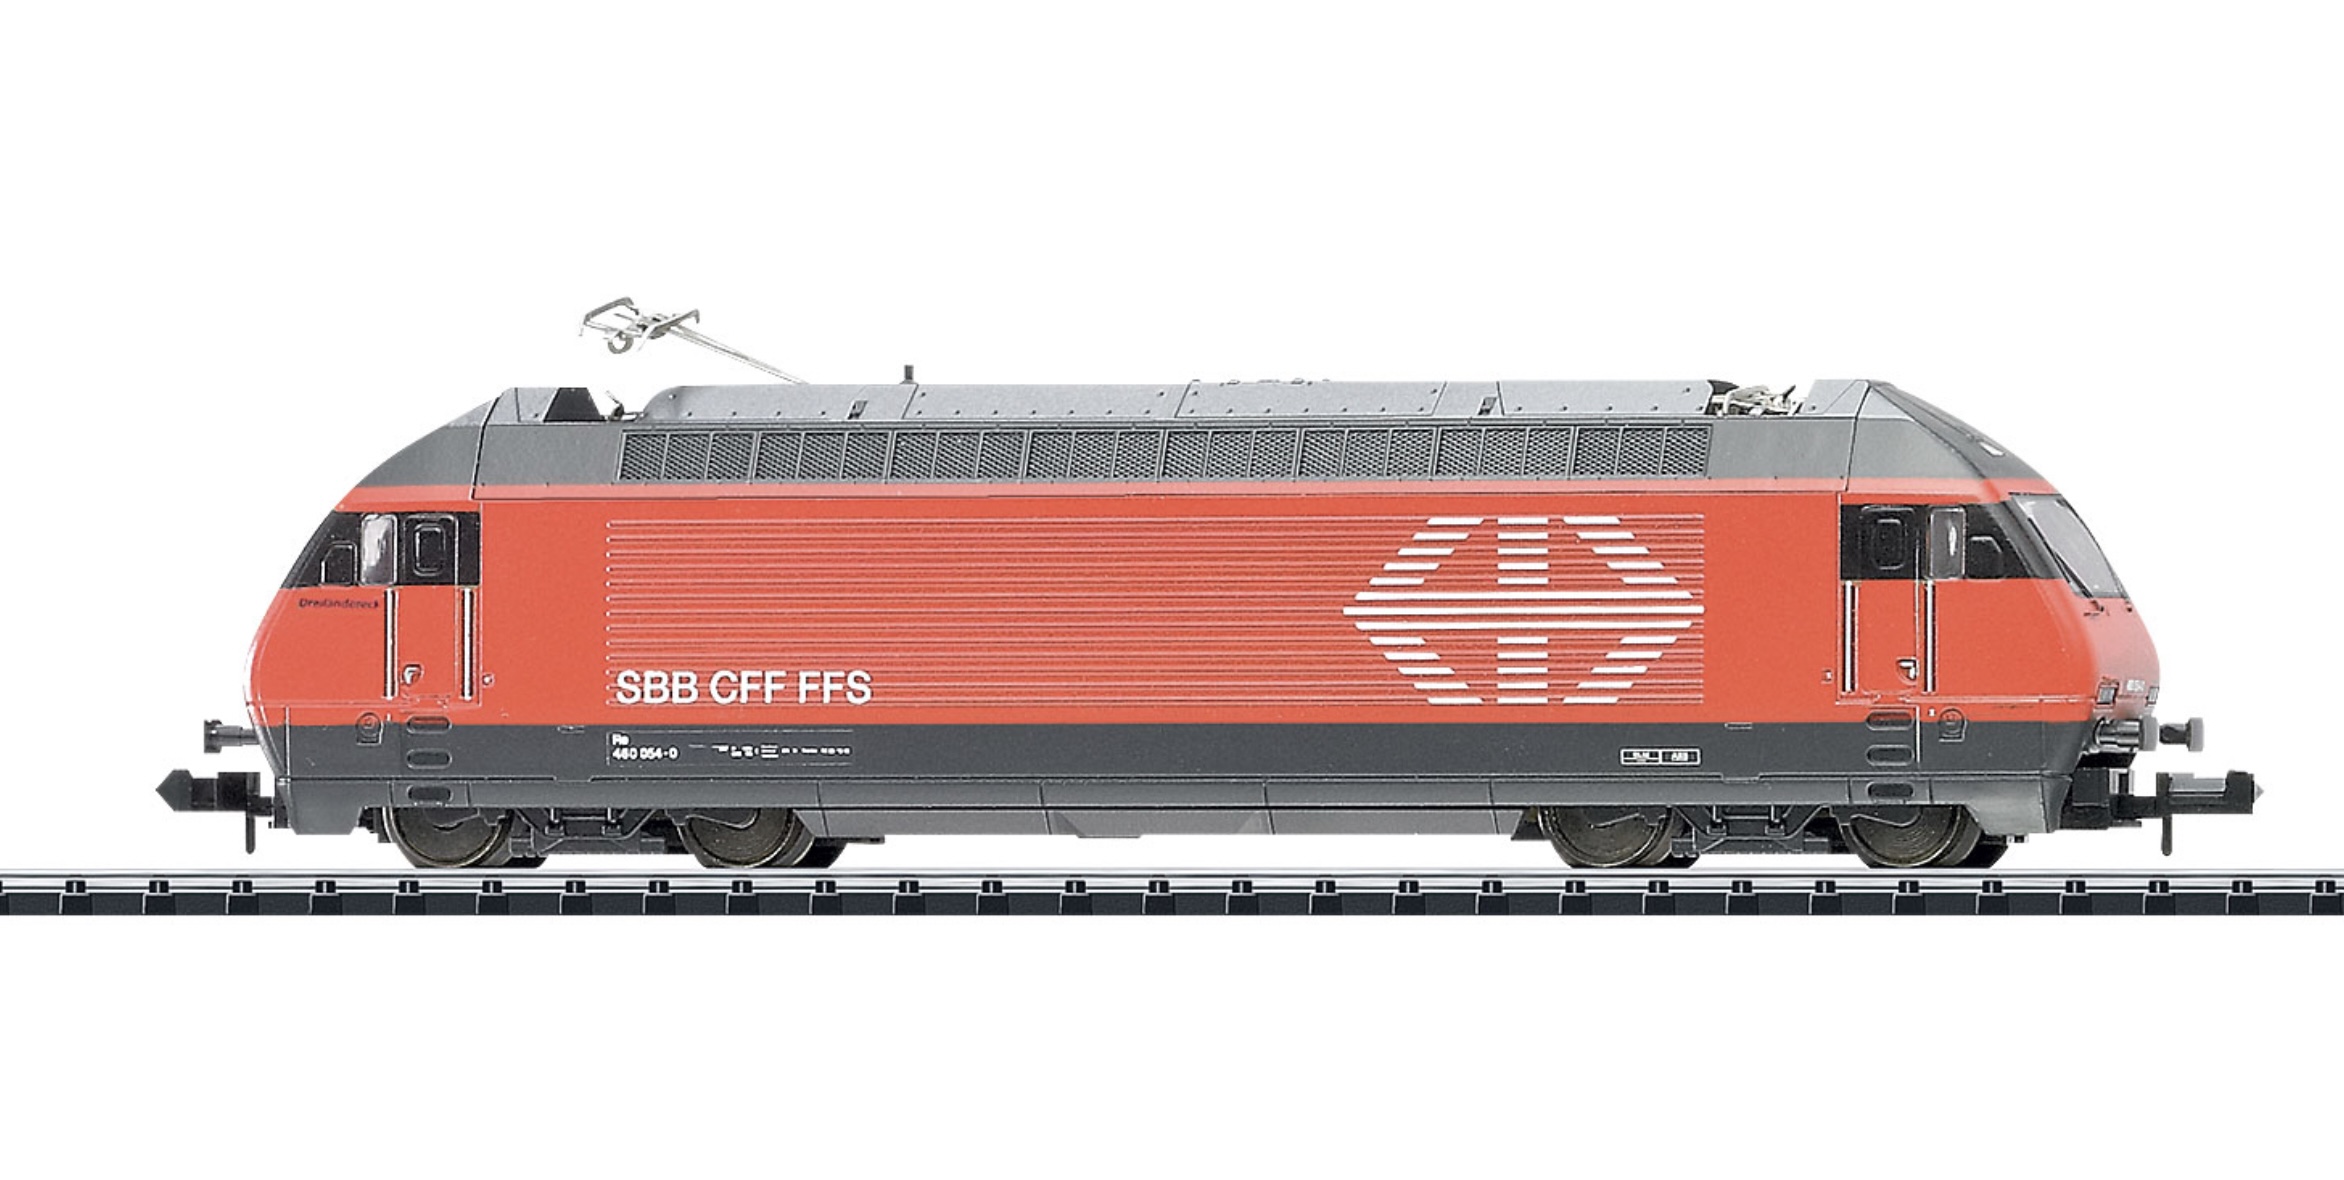 N Scale - Minitrix - 16761 - Locomotive, Electric, Class Re 460, Epoch VI - SBB CFF FFS - 460 054-0